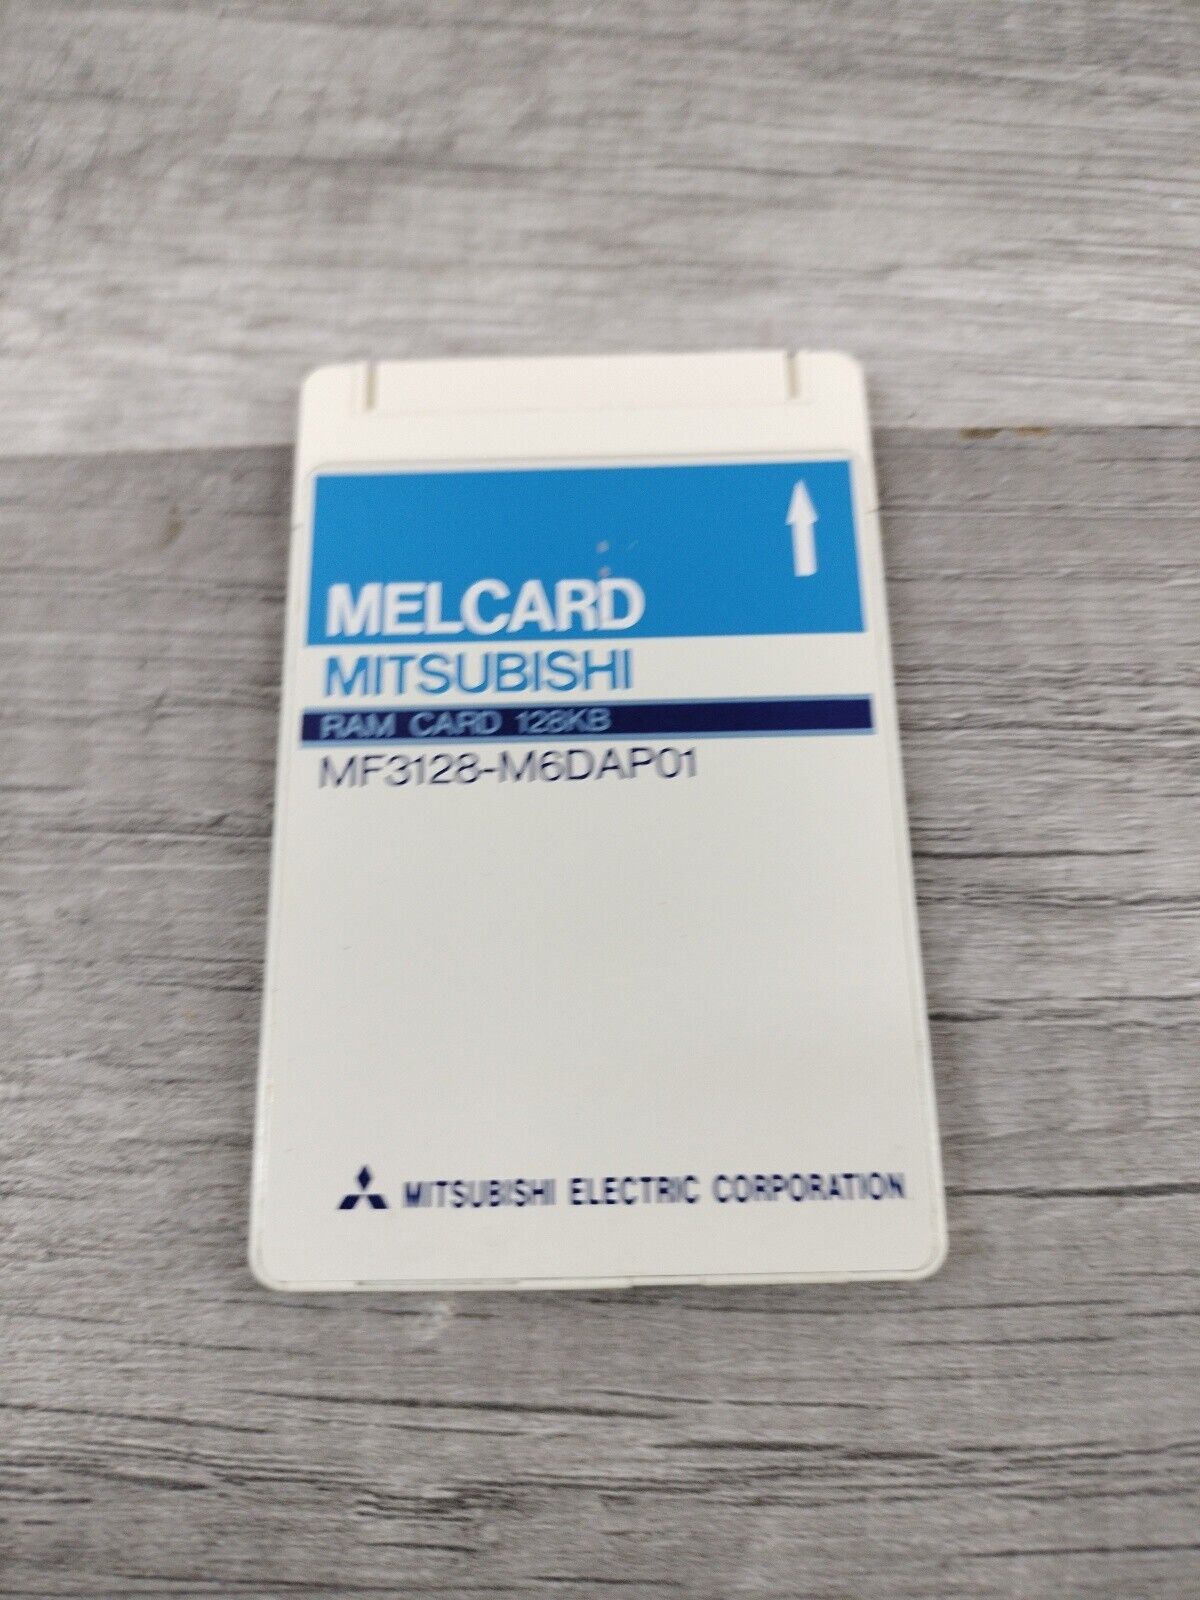 VINTAGE MITSUBISHI MELCARD MF3128-M6DAP01 RAM CARD 128KB